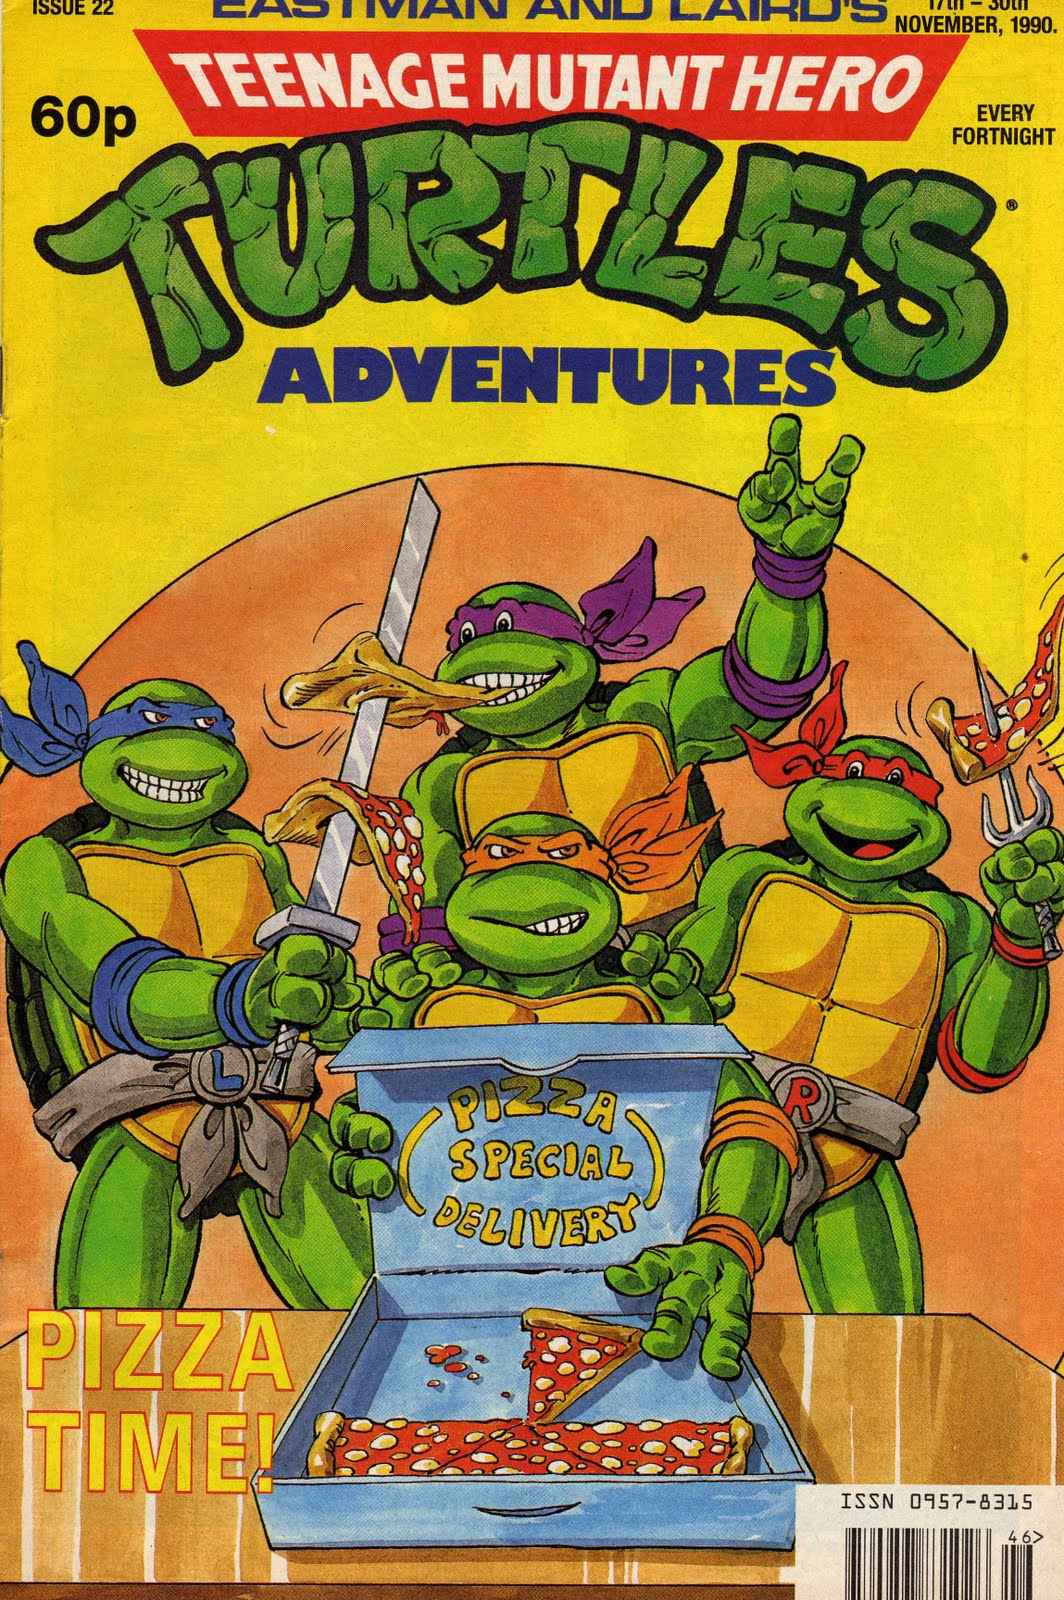 Read online Teenage Mutant Hero Turtles Adventures comic -  Issue #22 - 1